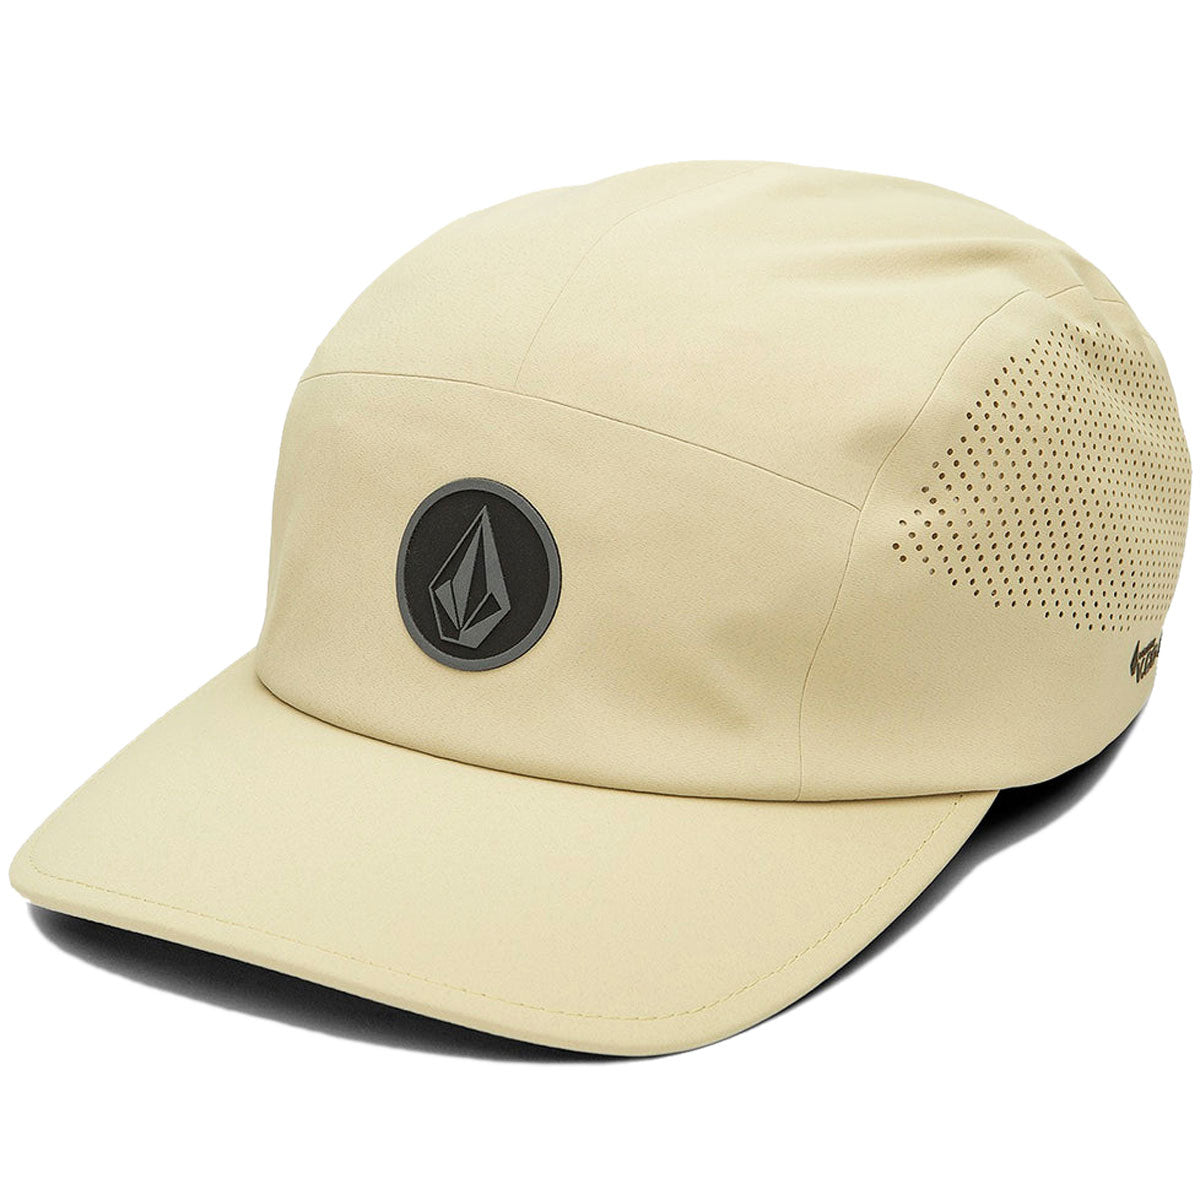 Volcom Stone Tech Delta Camper Adjustable Hat - Khaki image 1